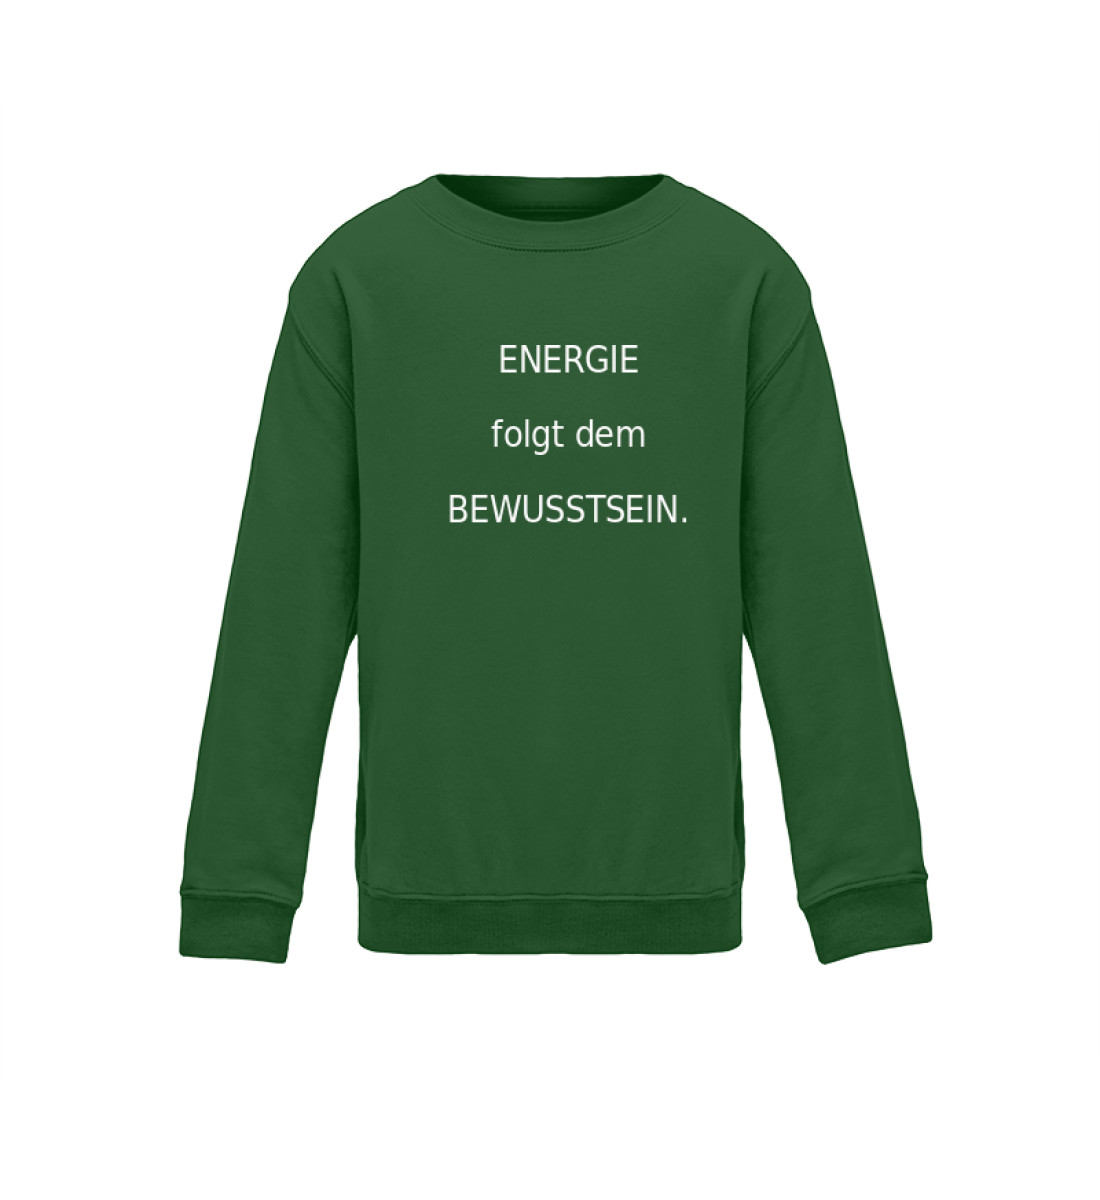 Kinder Sweater-Energie folgt d. Bewusstsein.